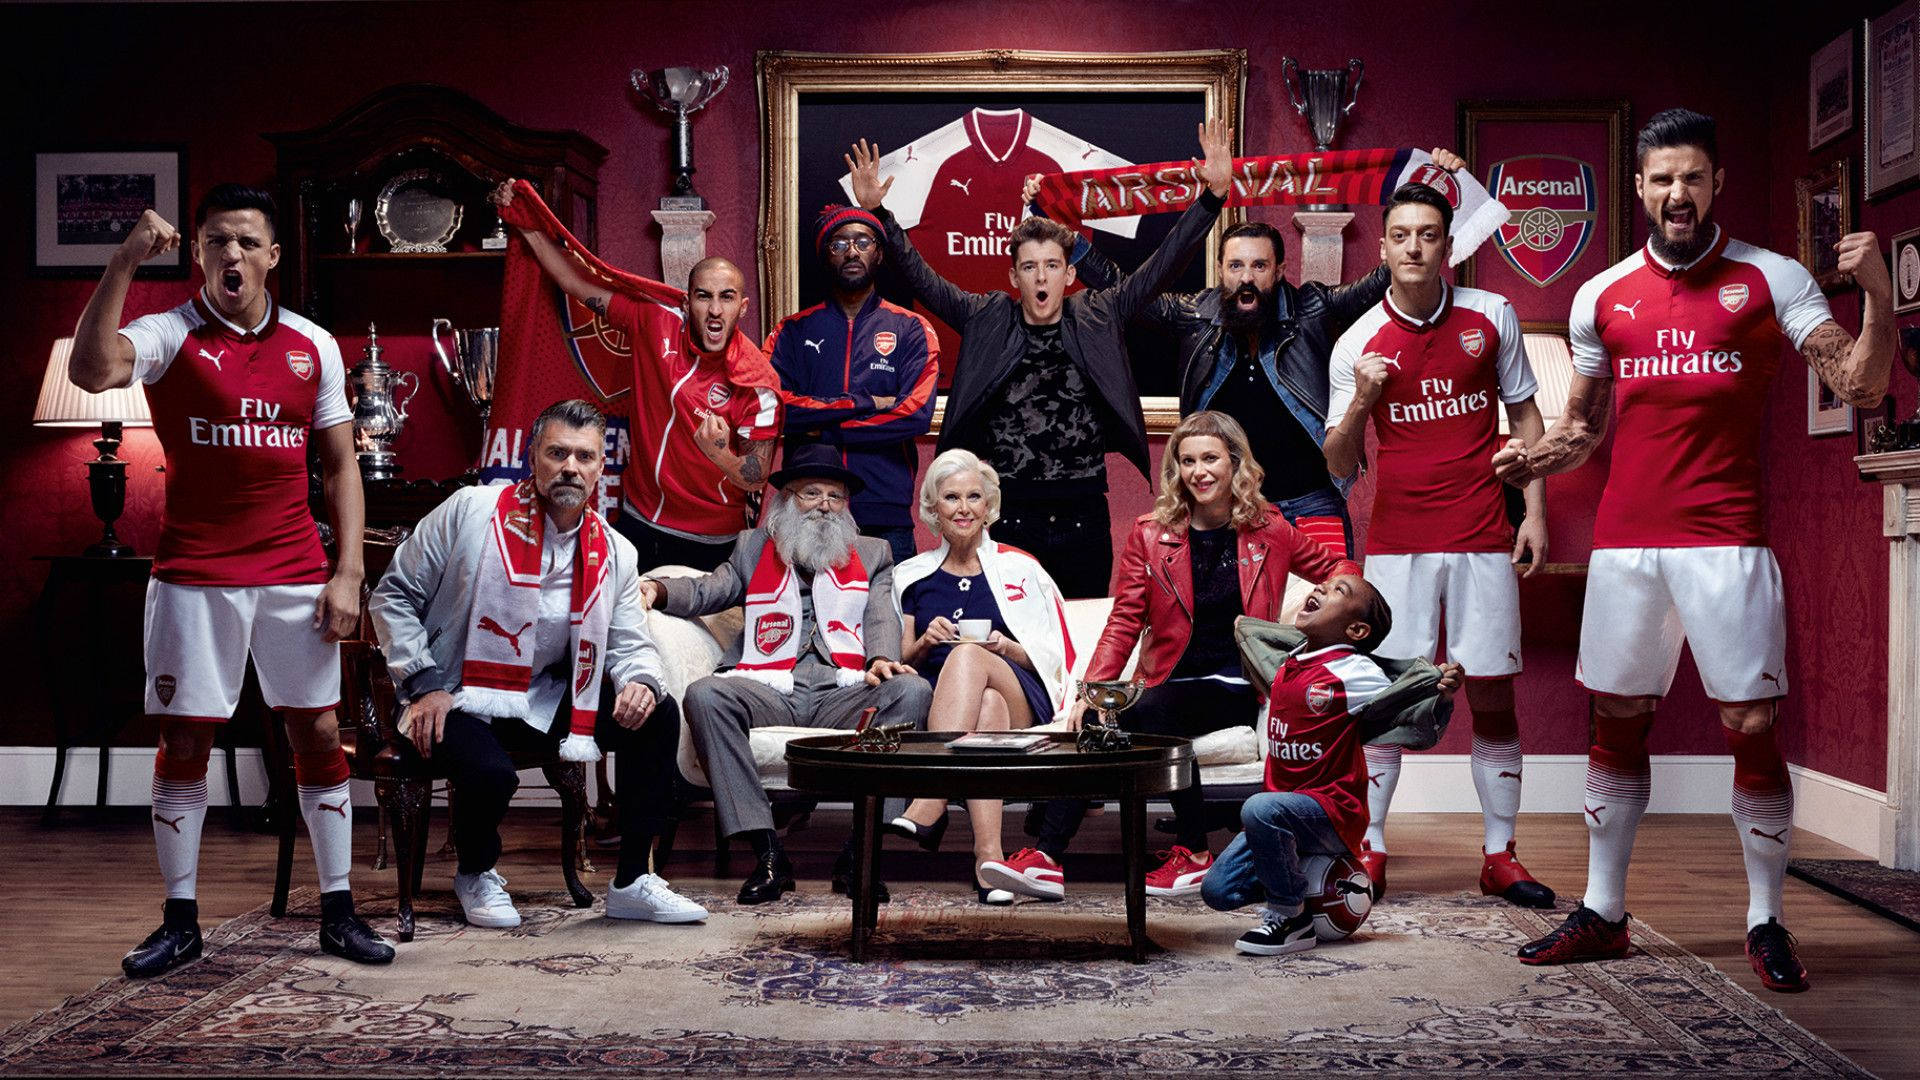 Arsenal FC Promotional Photo Wallpaper